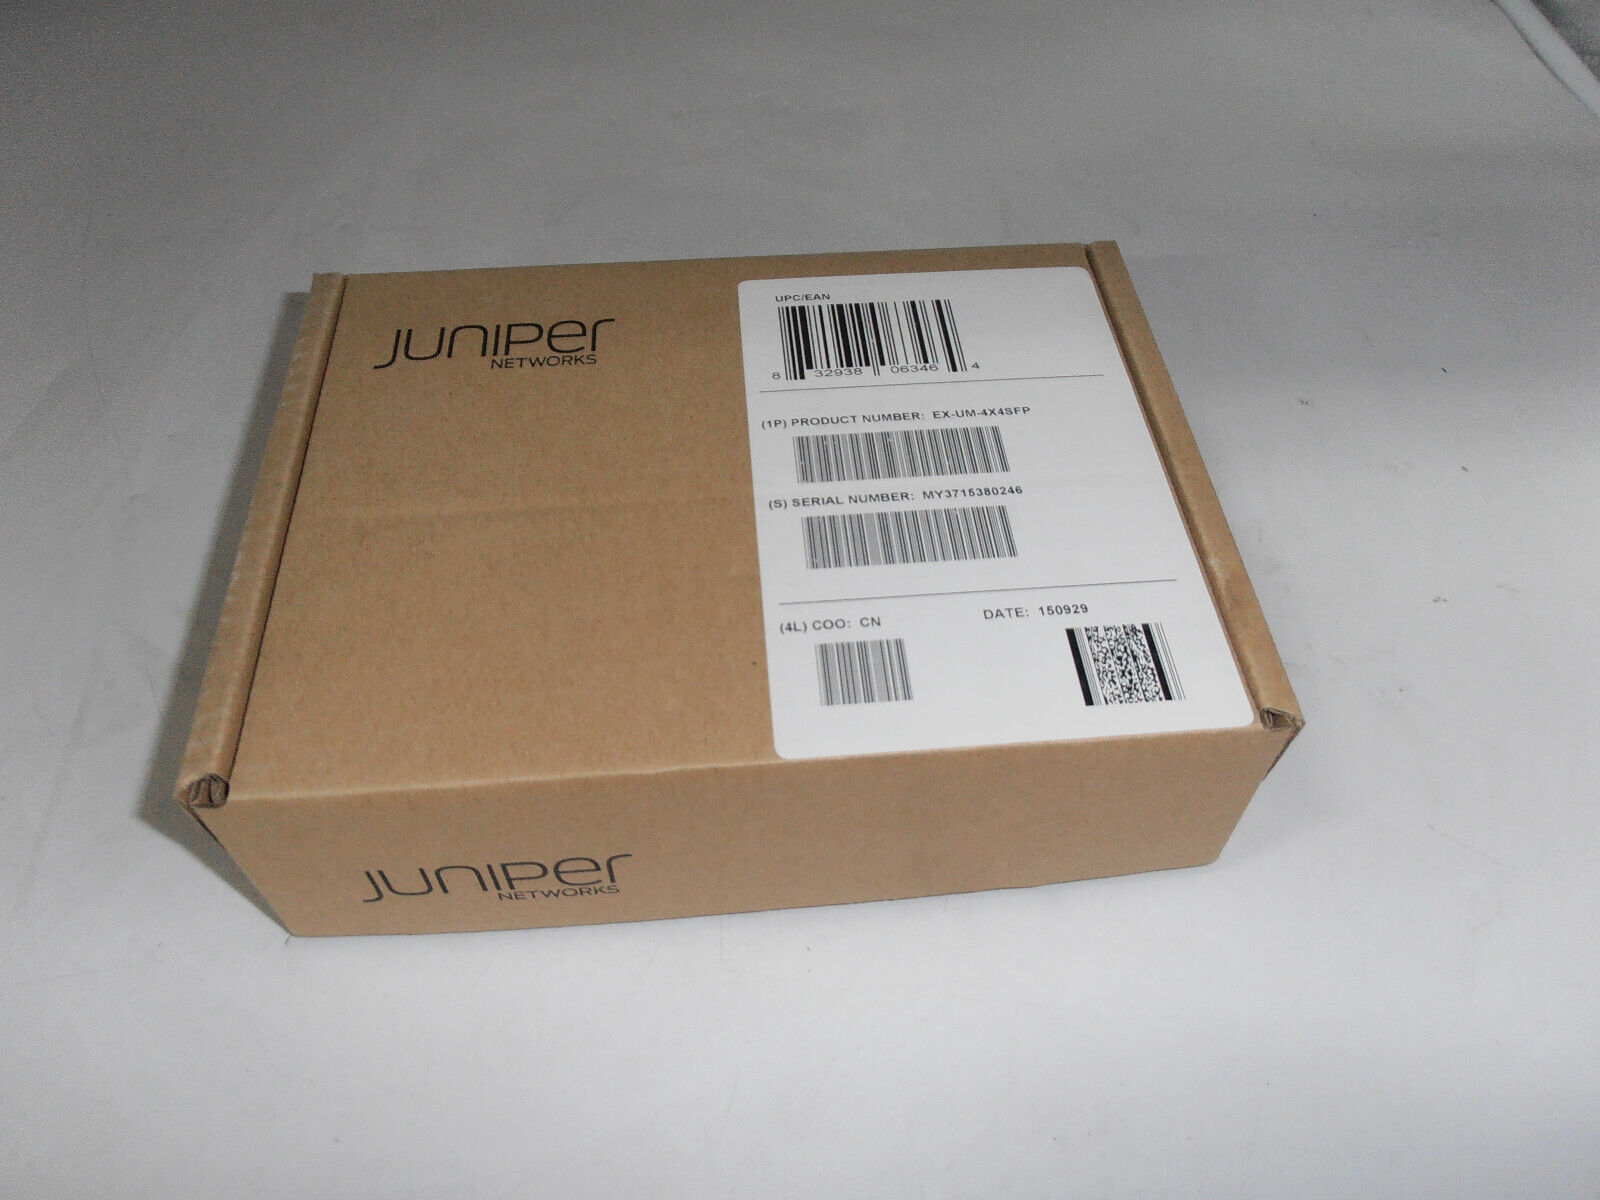 Juniper EX-UM-4X4SFP Uplink Module For EX4300 Switch  - New Factory Sealed